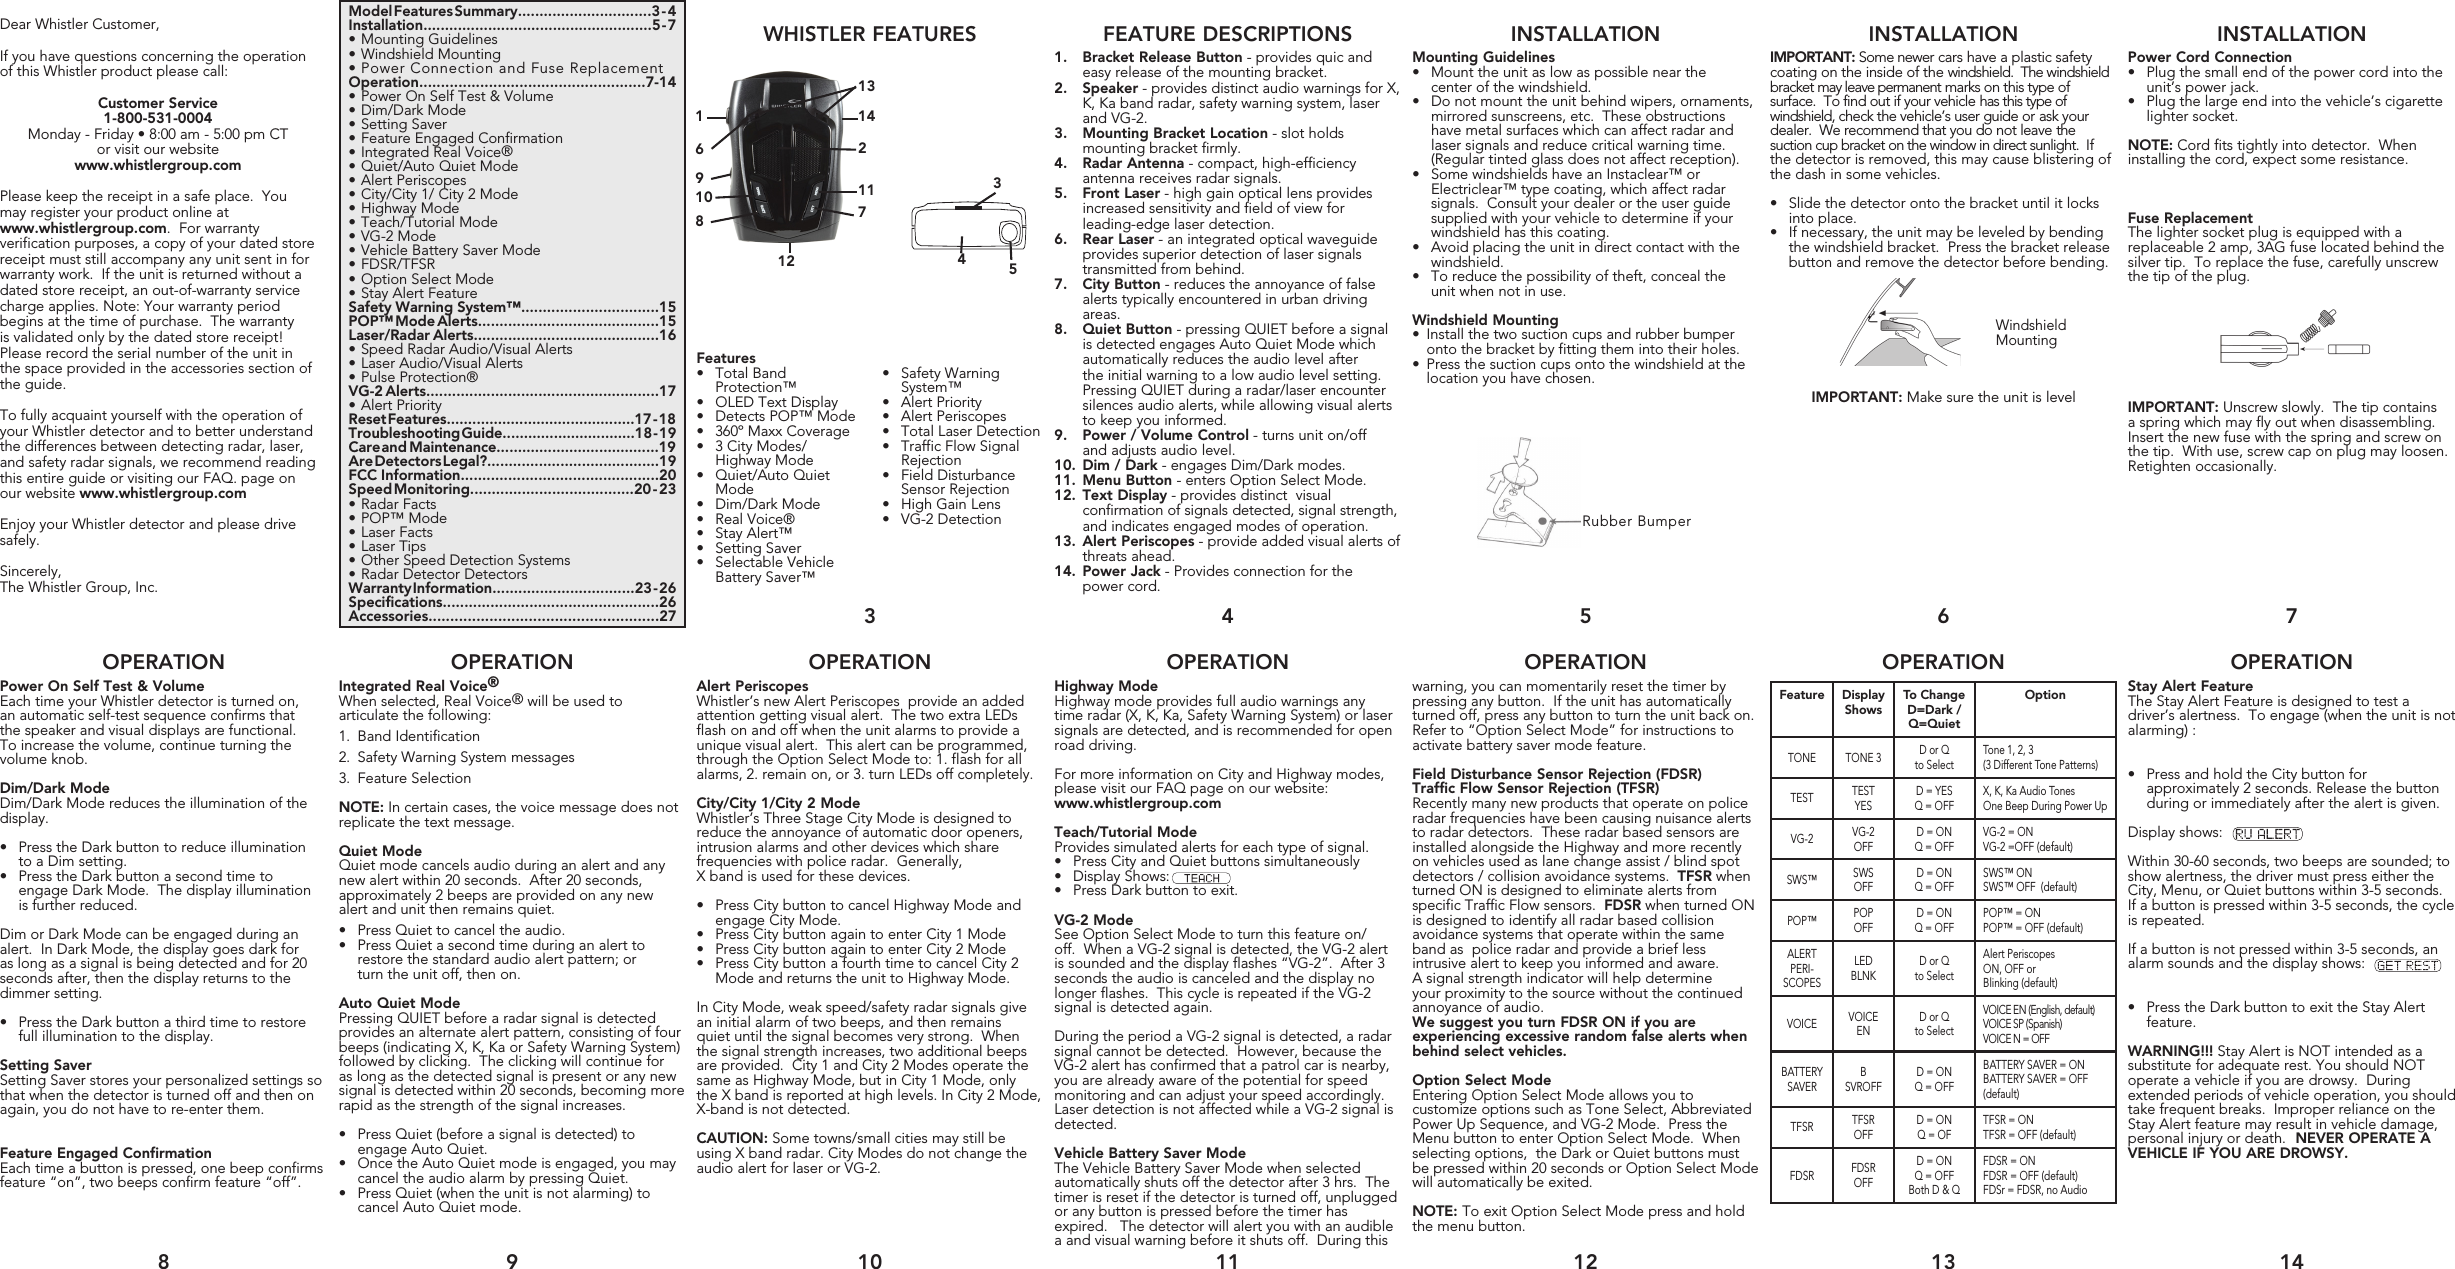 The Whistler Group WH23 Radar Detector User Manual Manual Z 19R